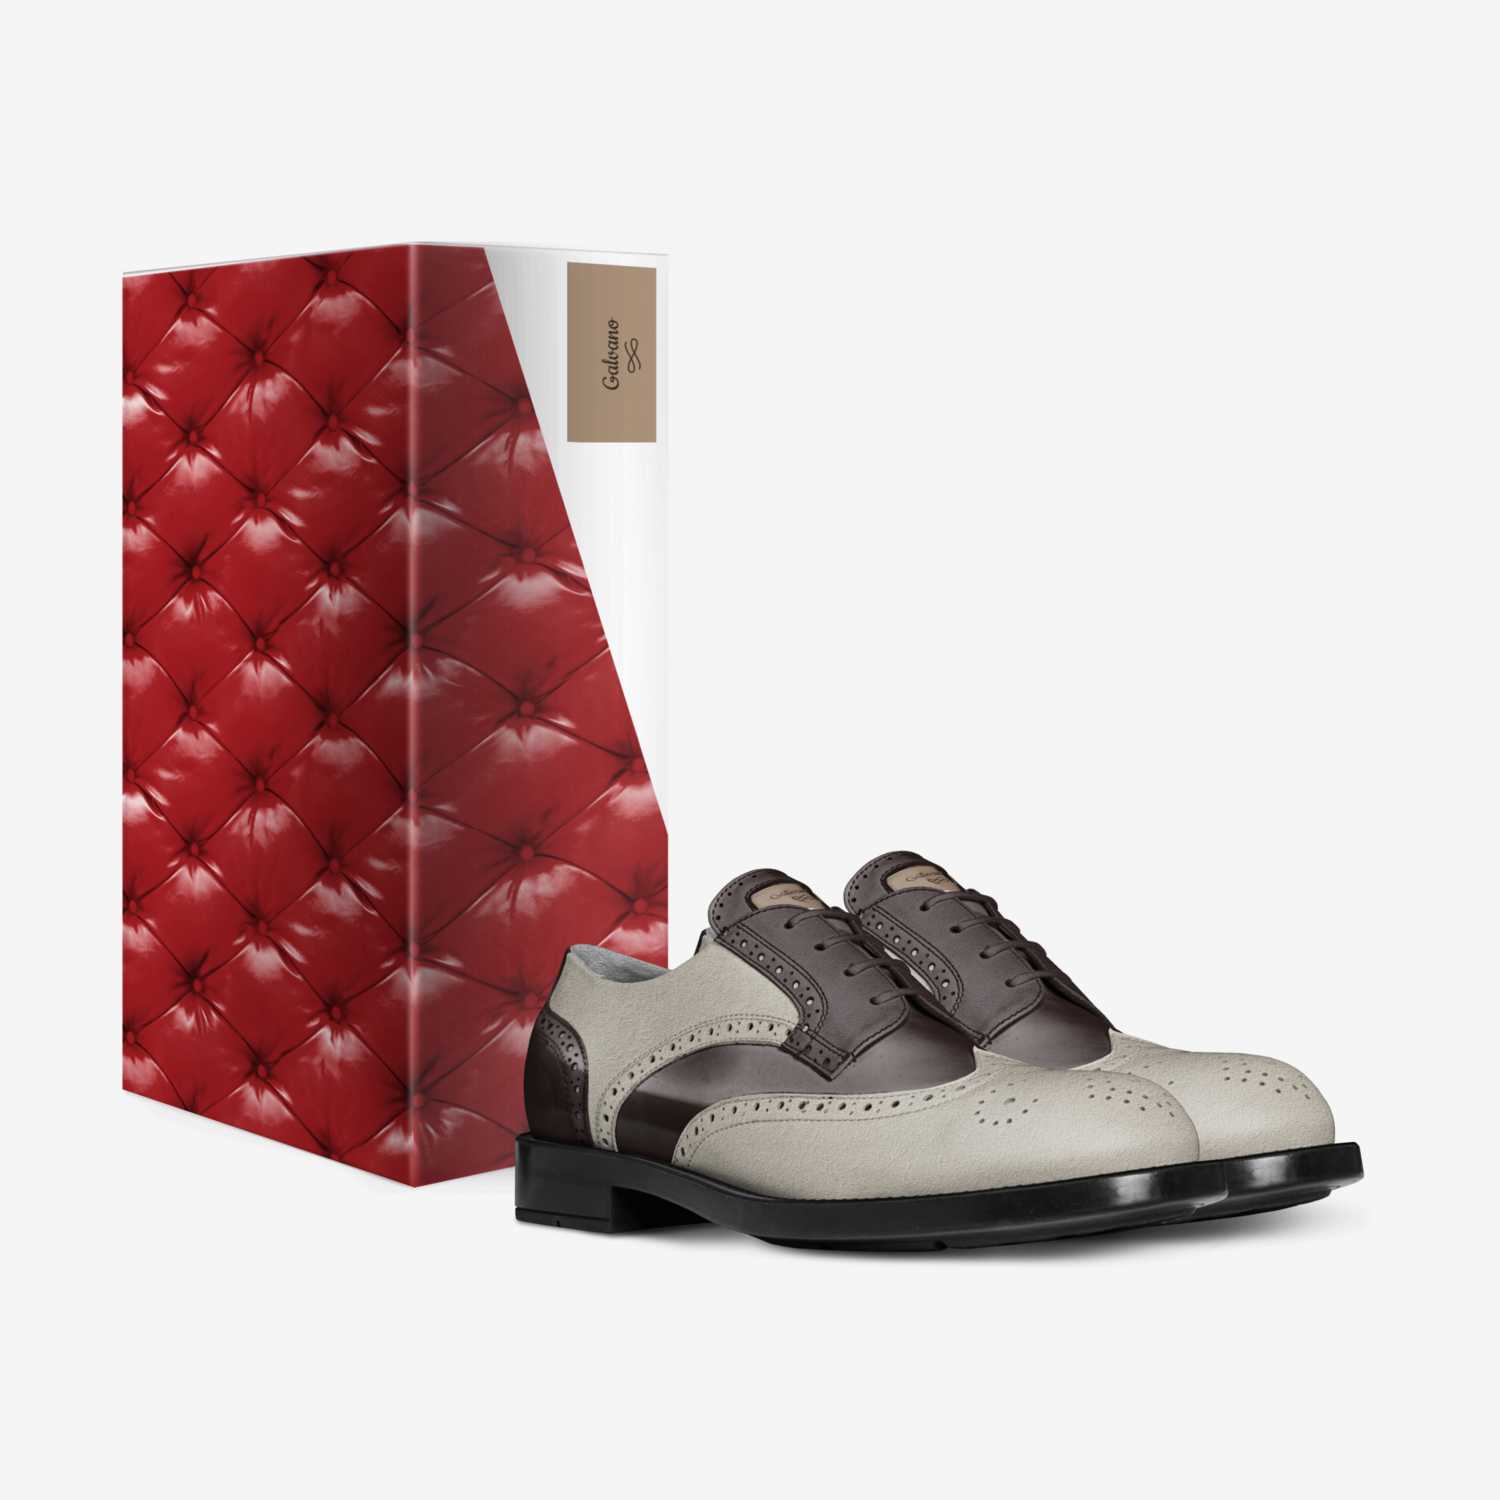 Galvano custom made in Italy shoes by Gawain Berti | Box view